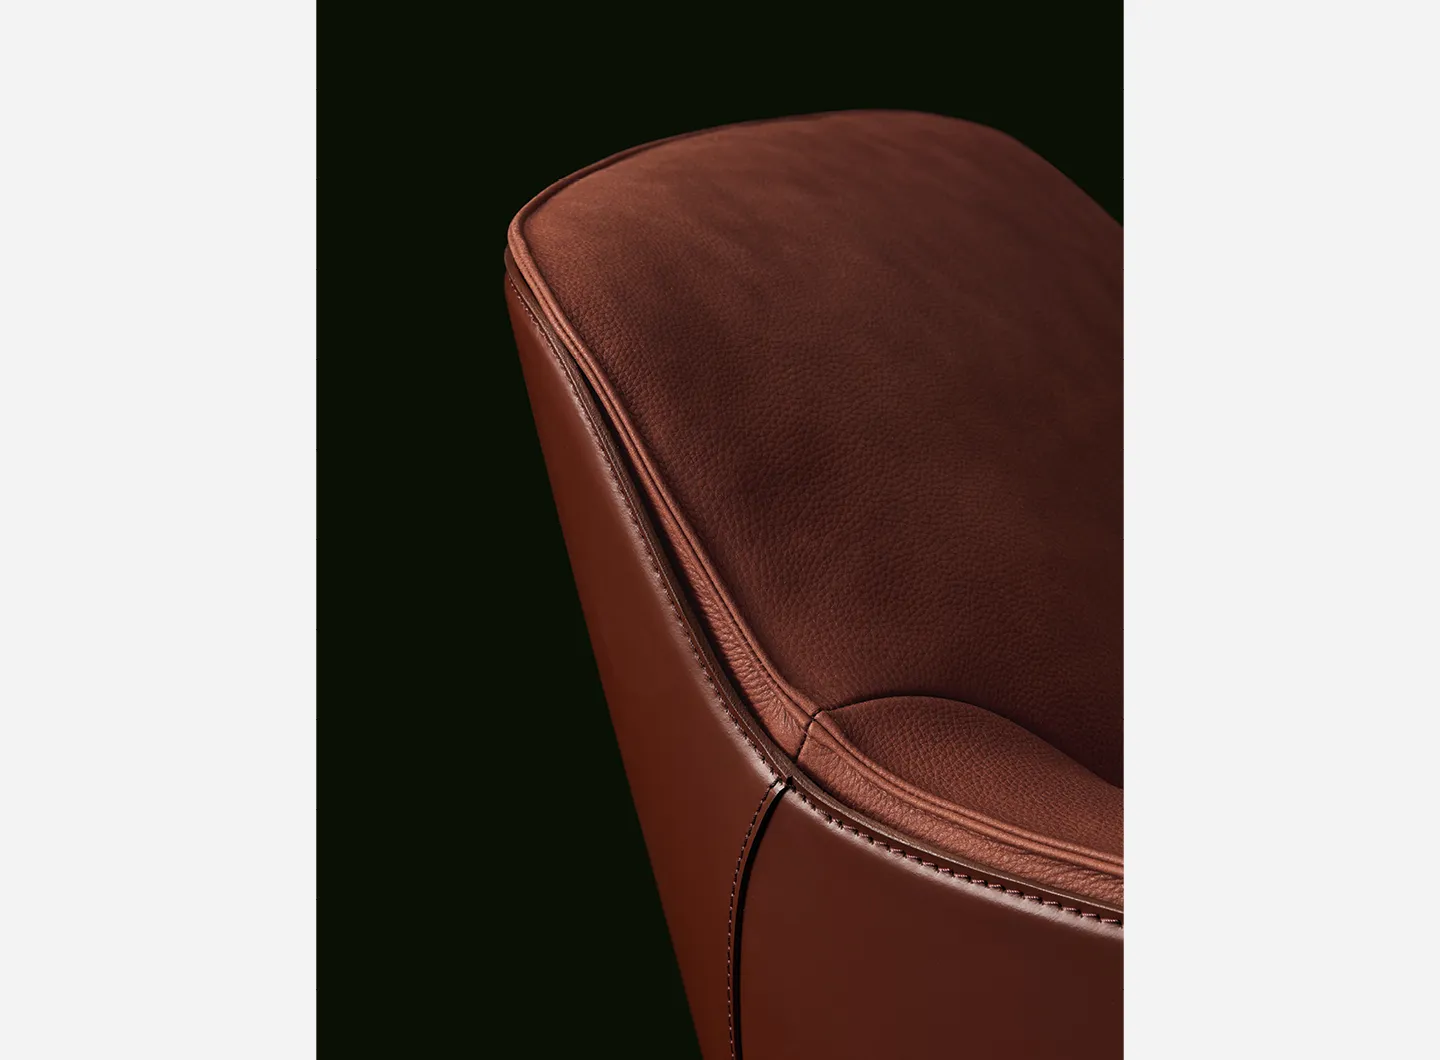 Kaori armchair, design by JM Massaud